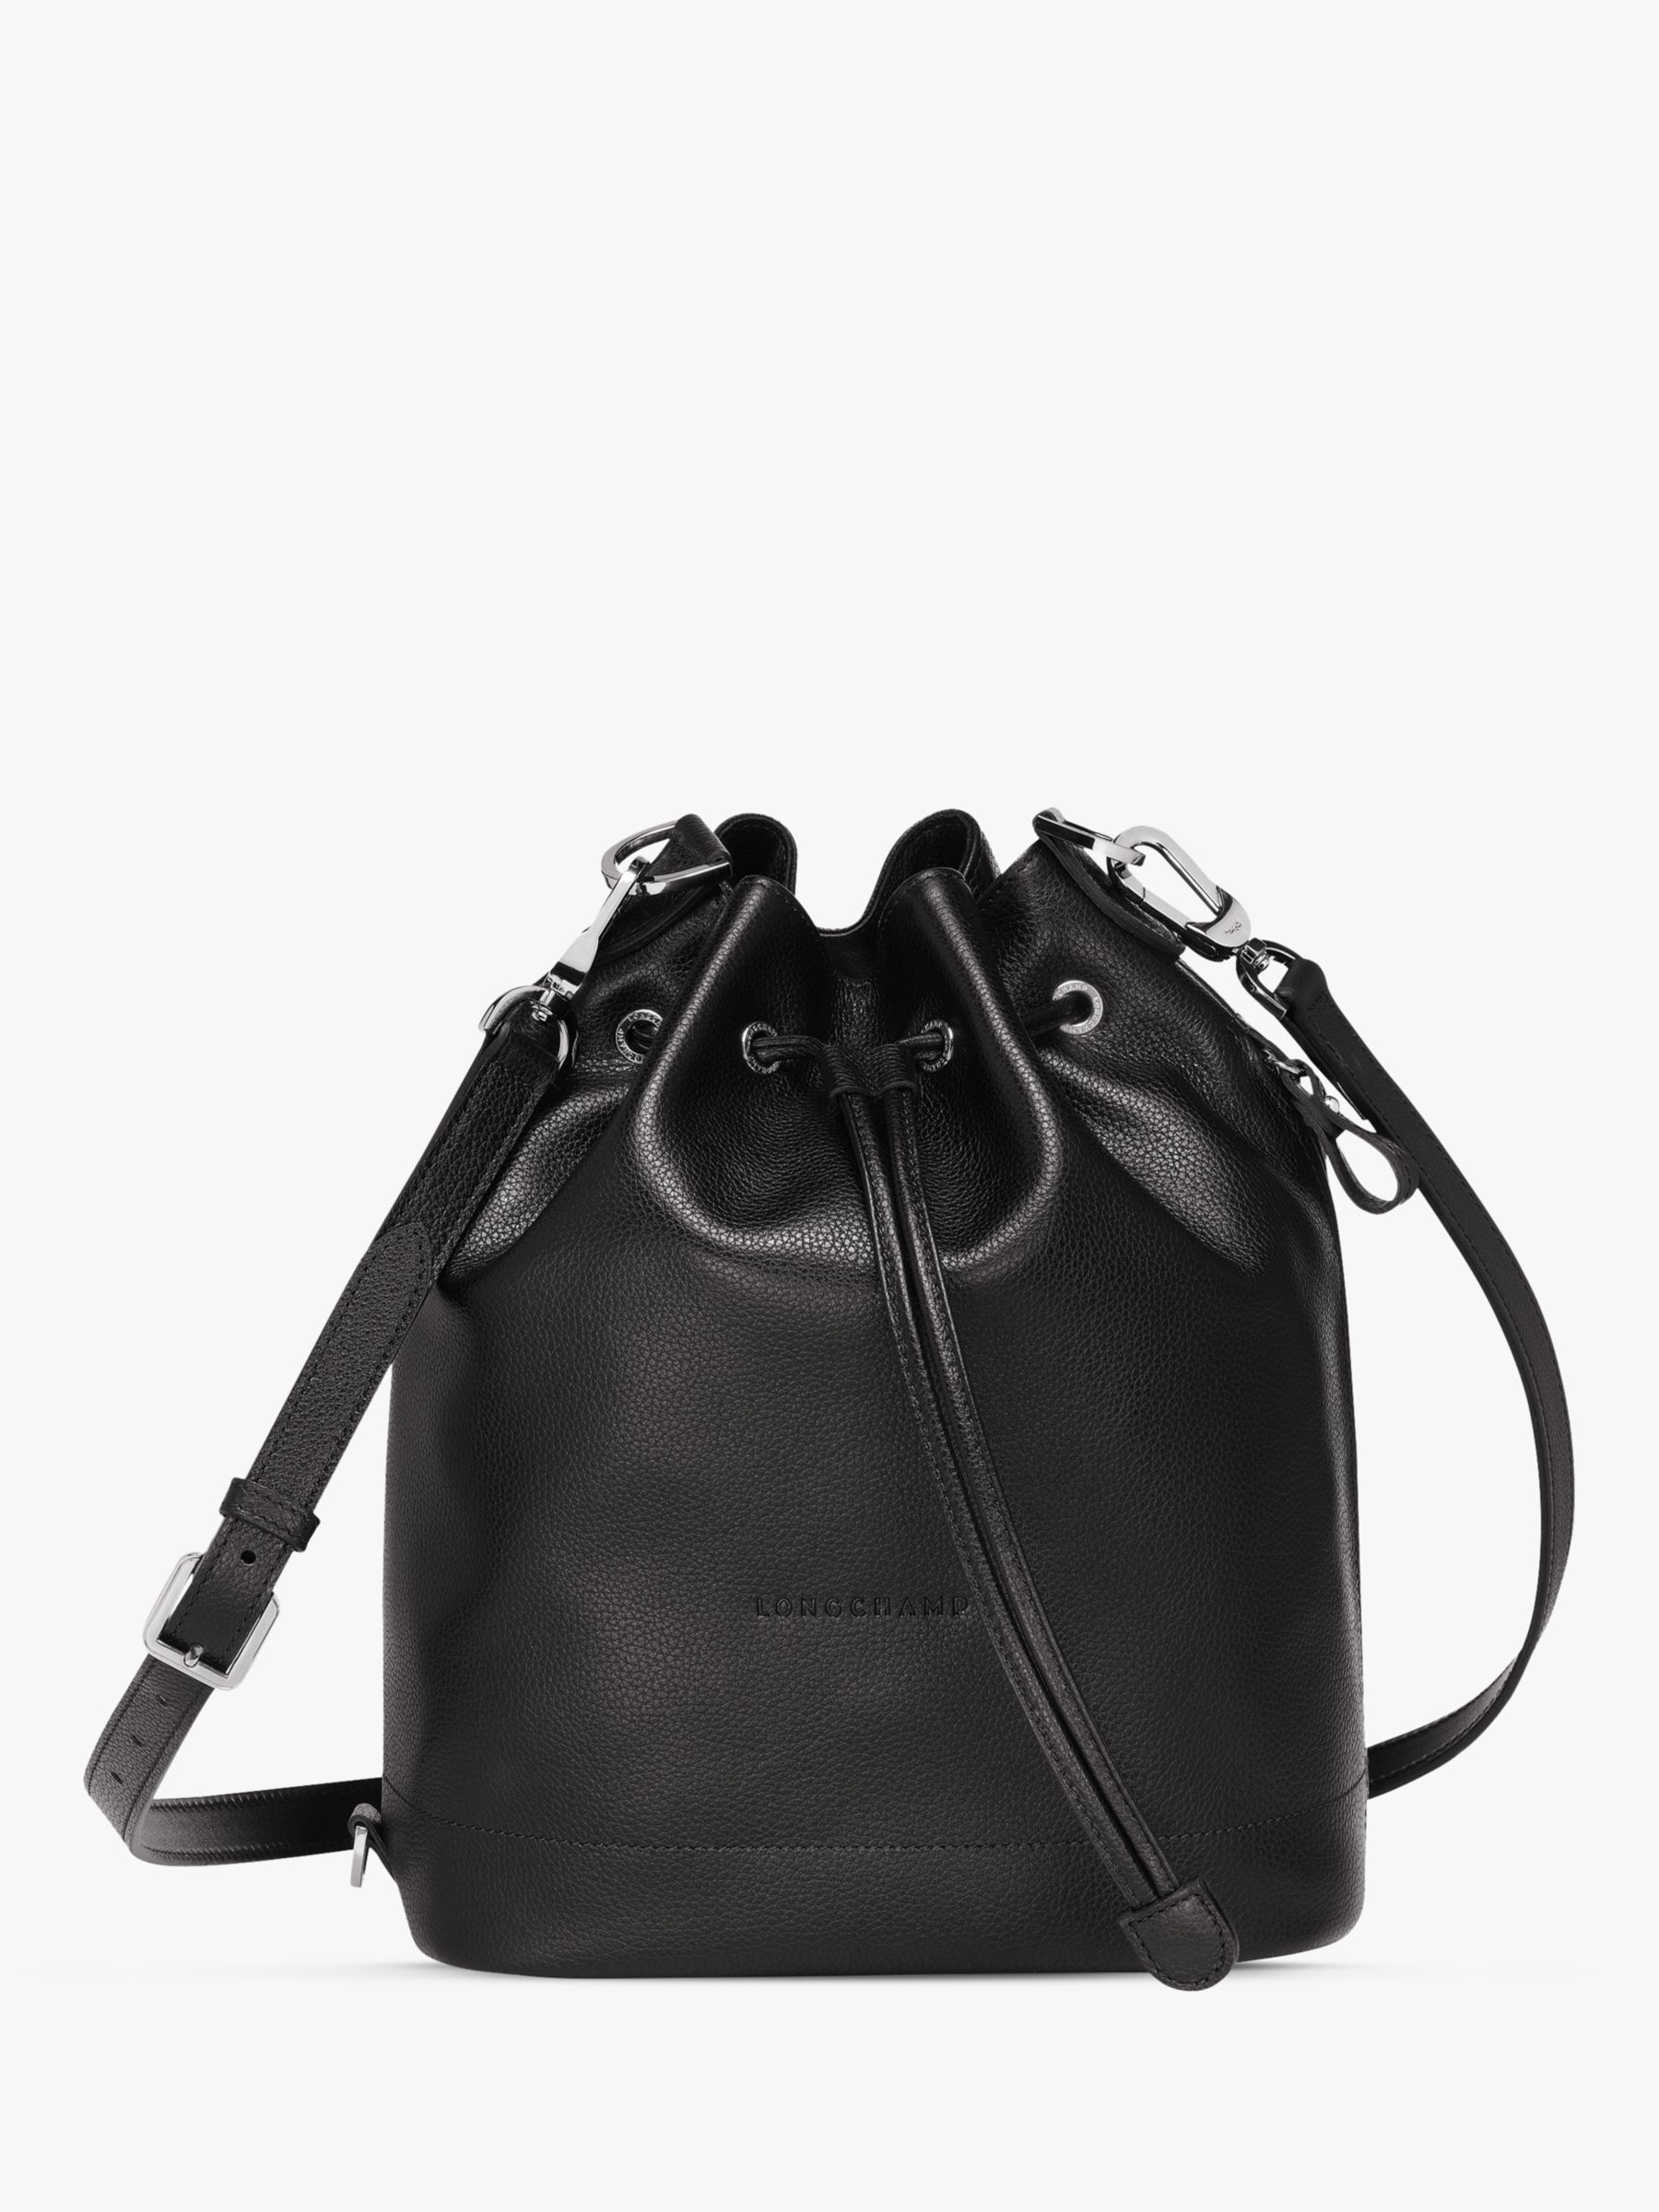 Longchamp Le Foulonné Medium Leather Bucket Bag, Black